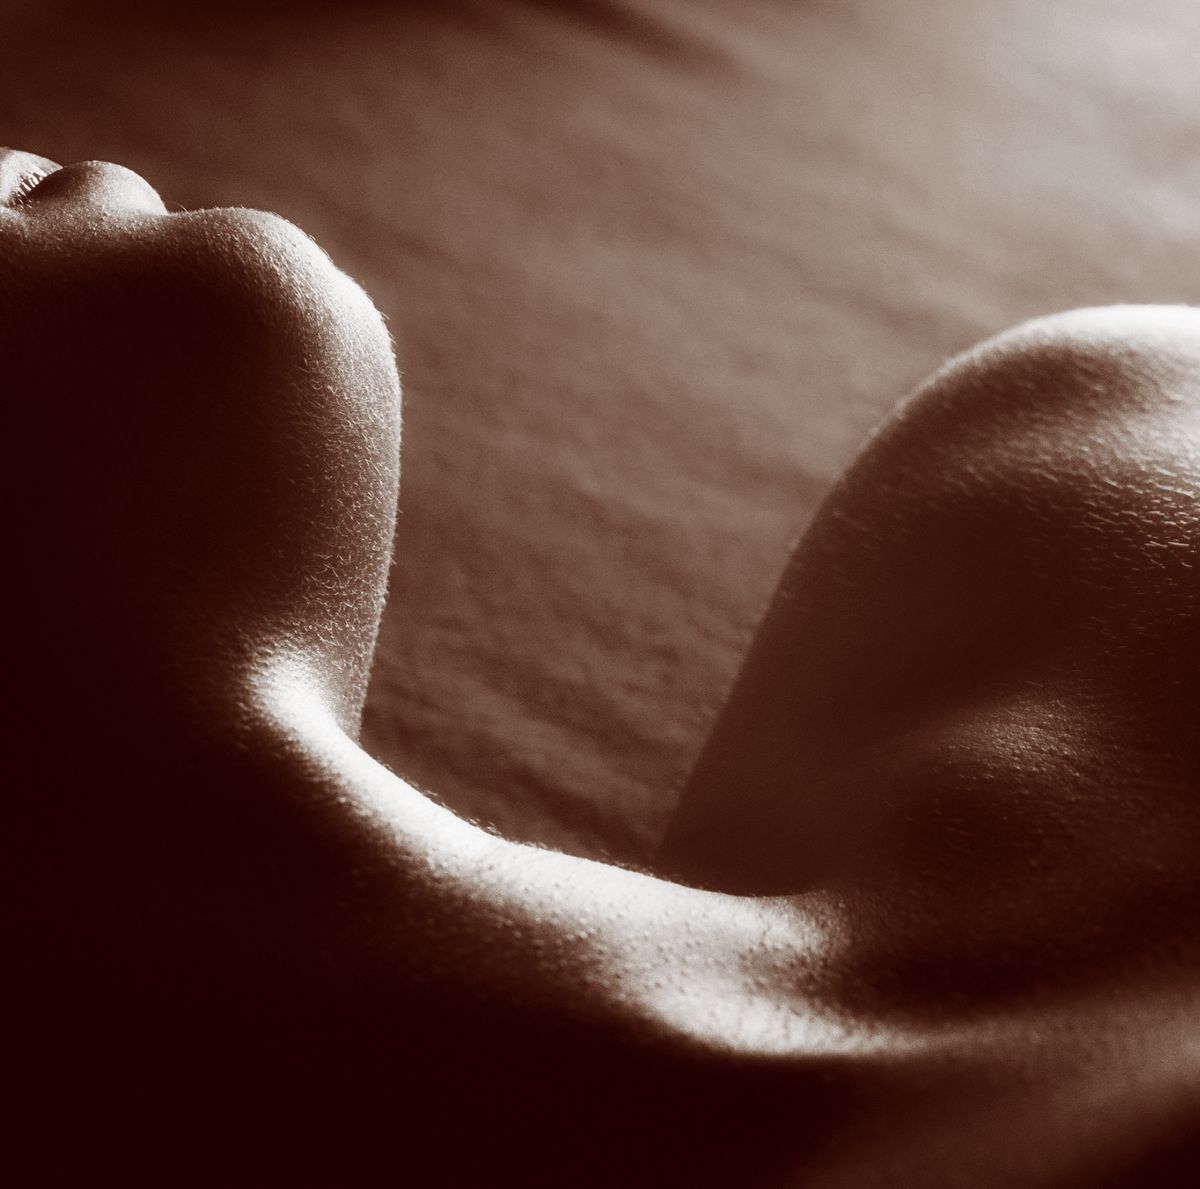 Free the nipple! Tumblr is bringing back nudity